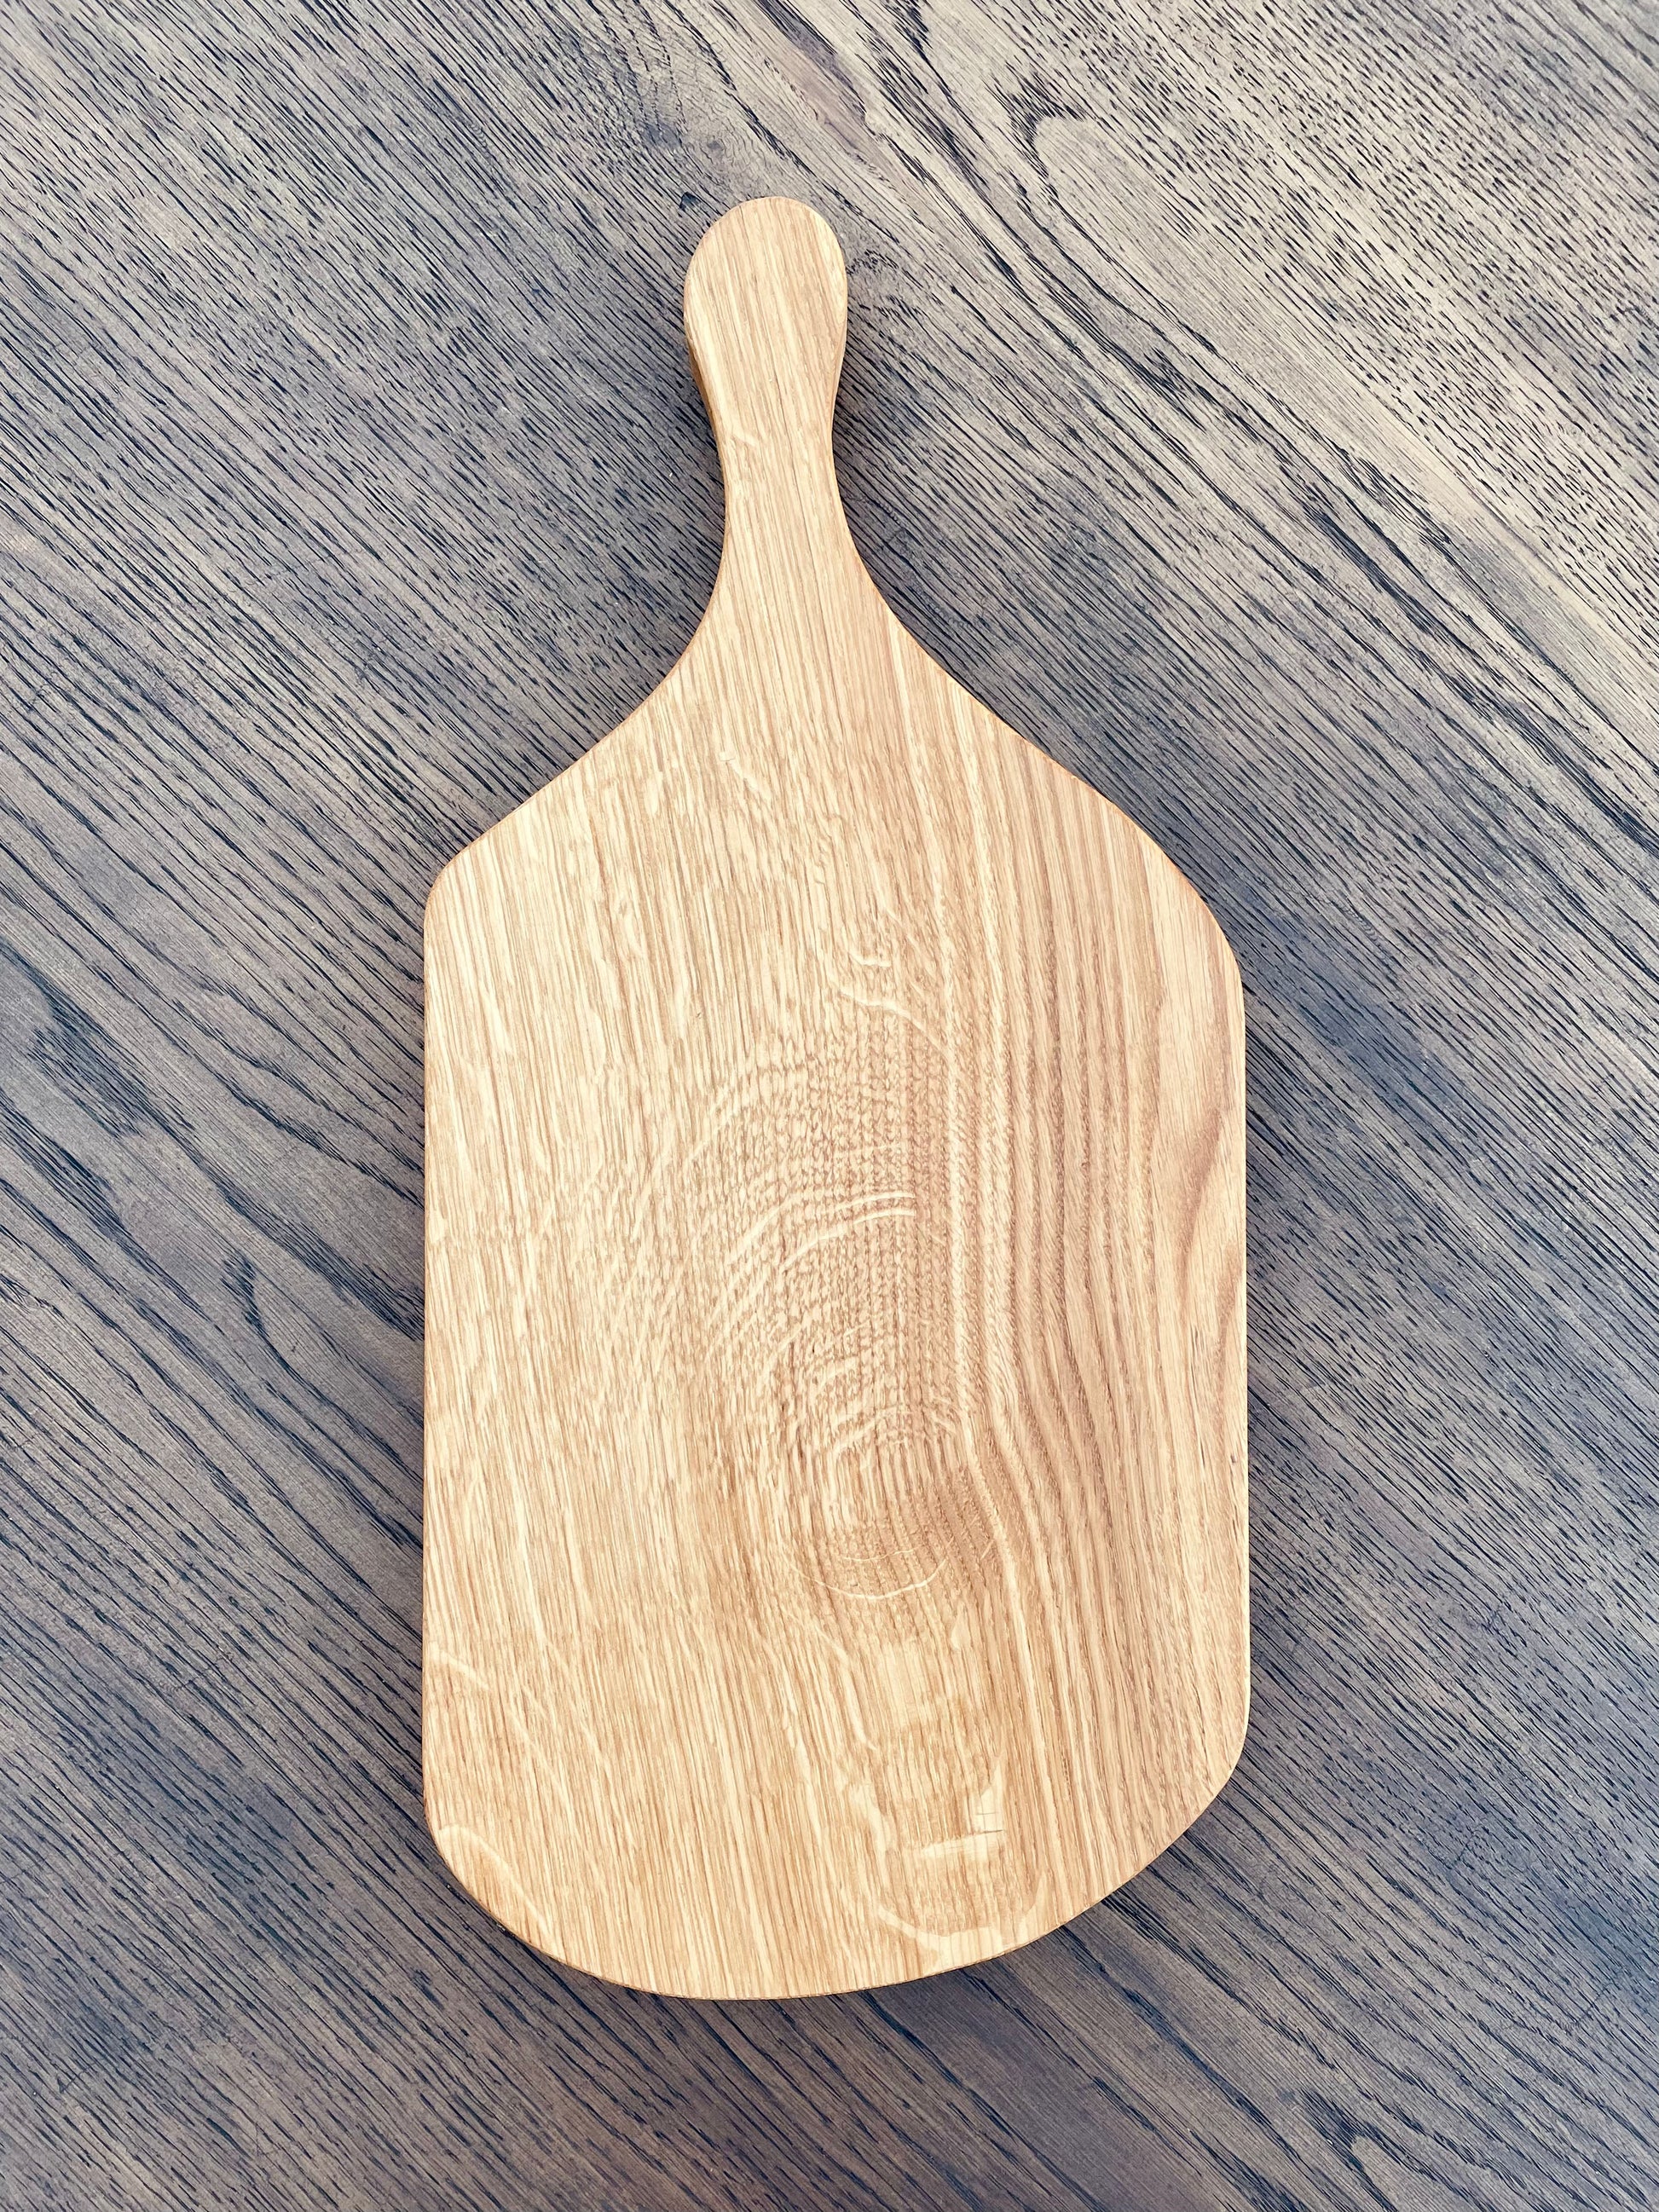 New: Hardwood Cutting Board - Medium 18